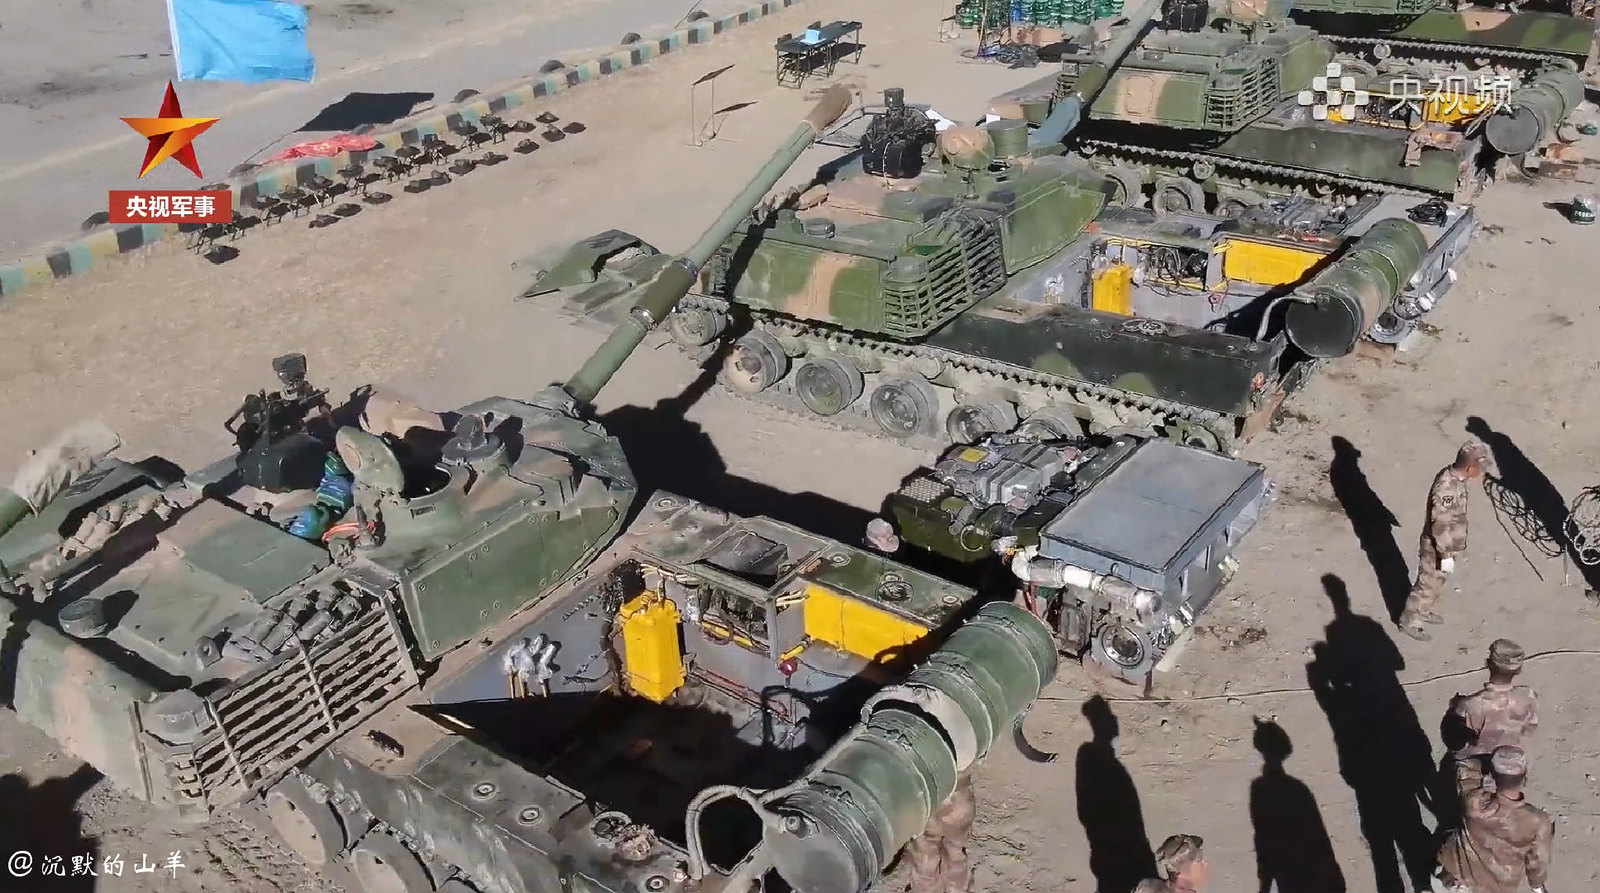 South Korea's K2 tank export plans suffer under transmission failure